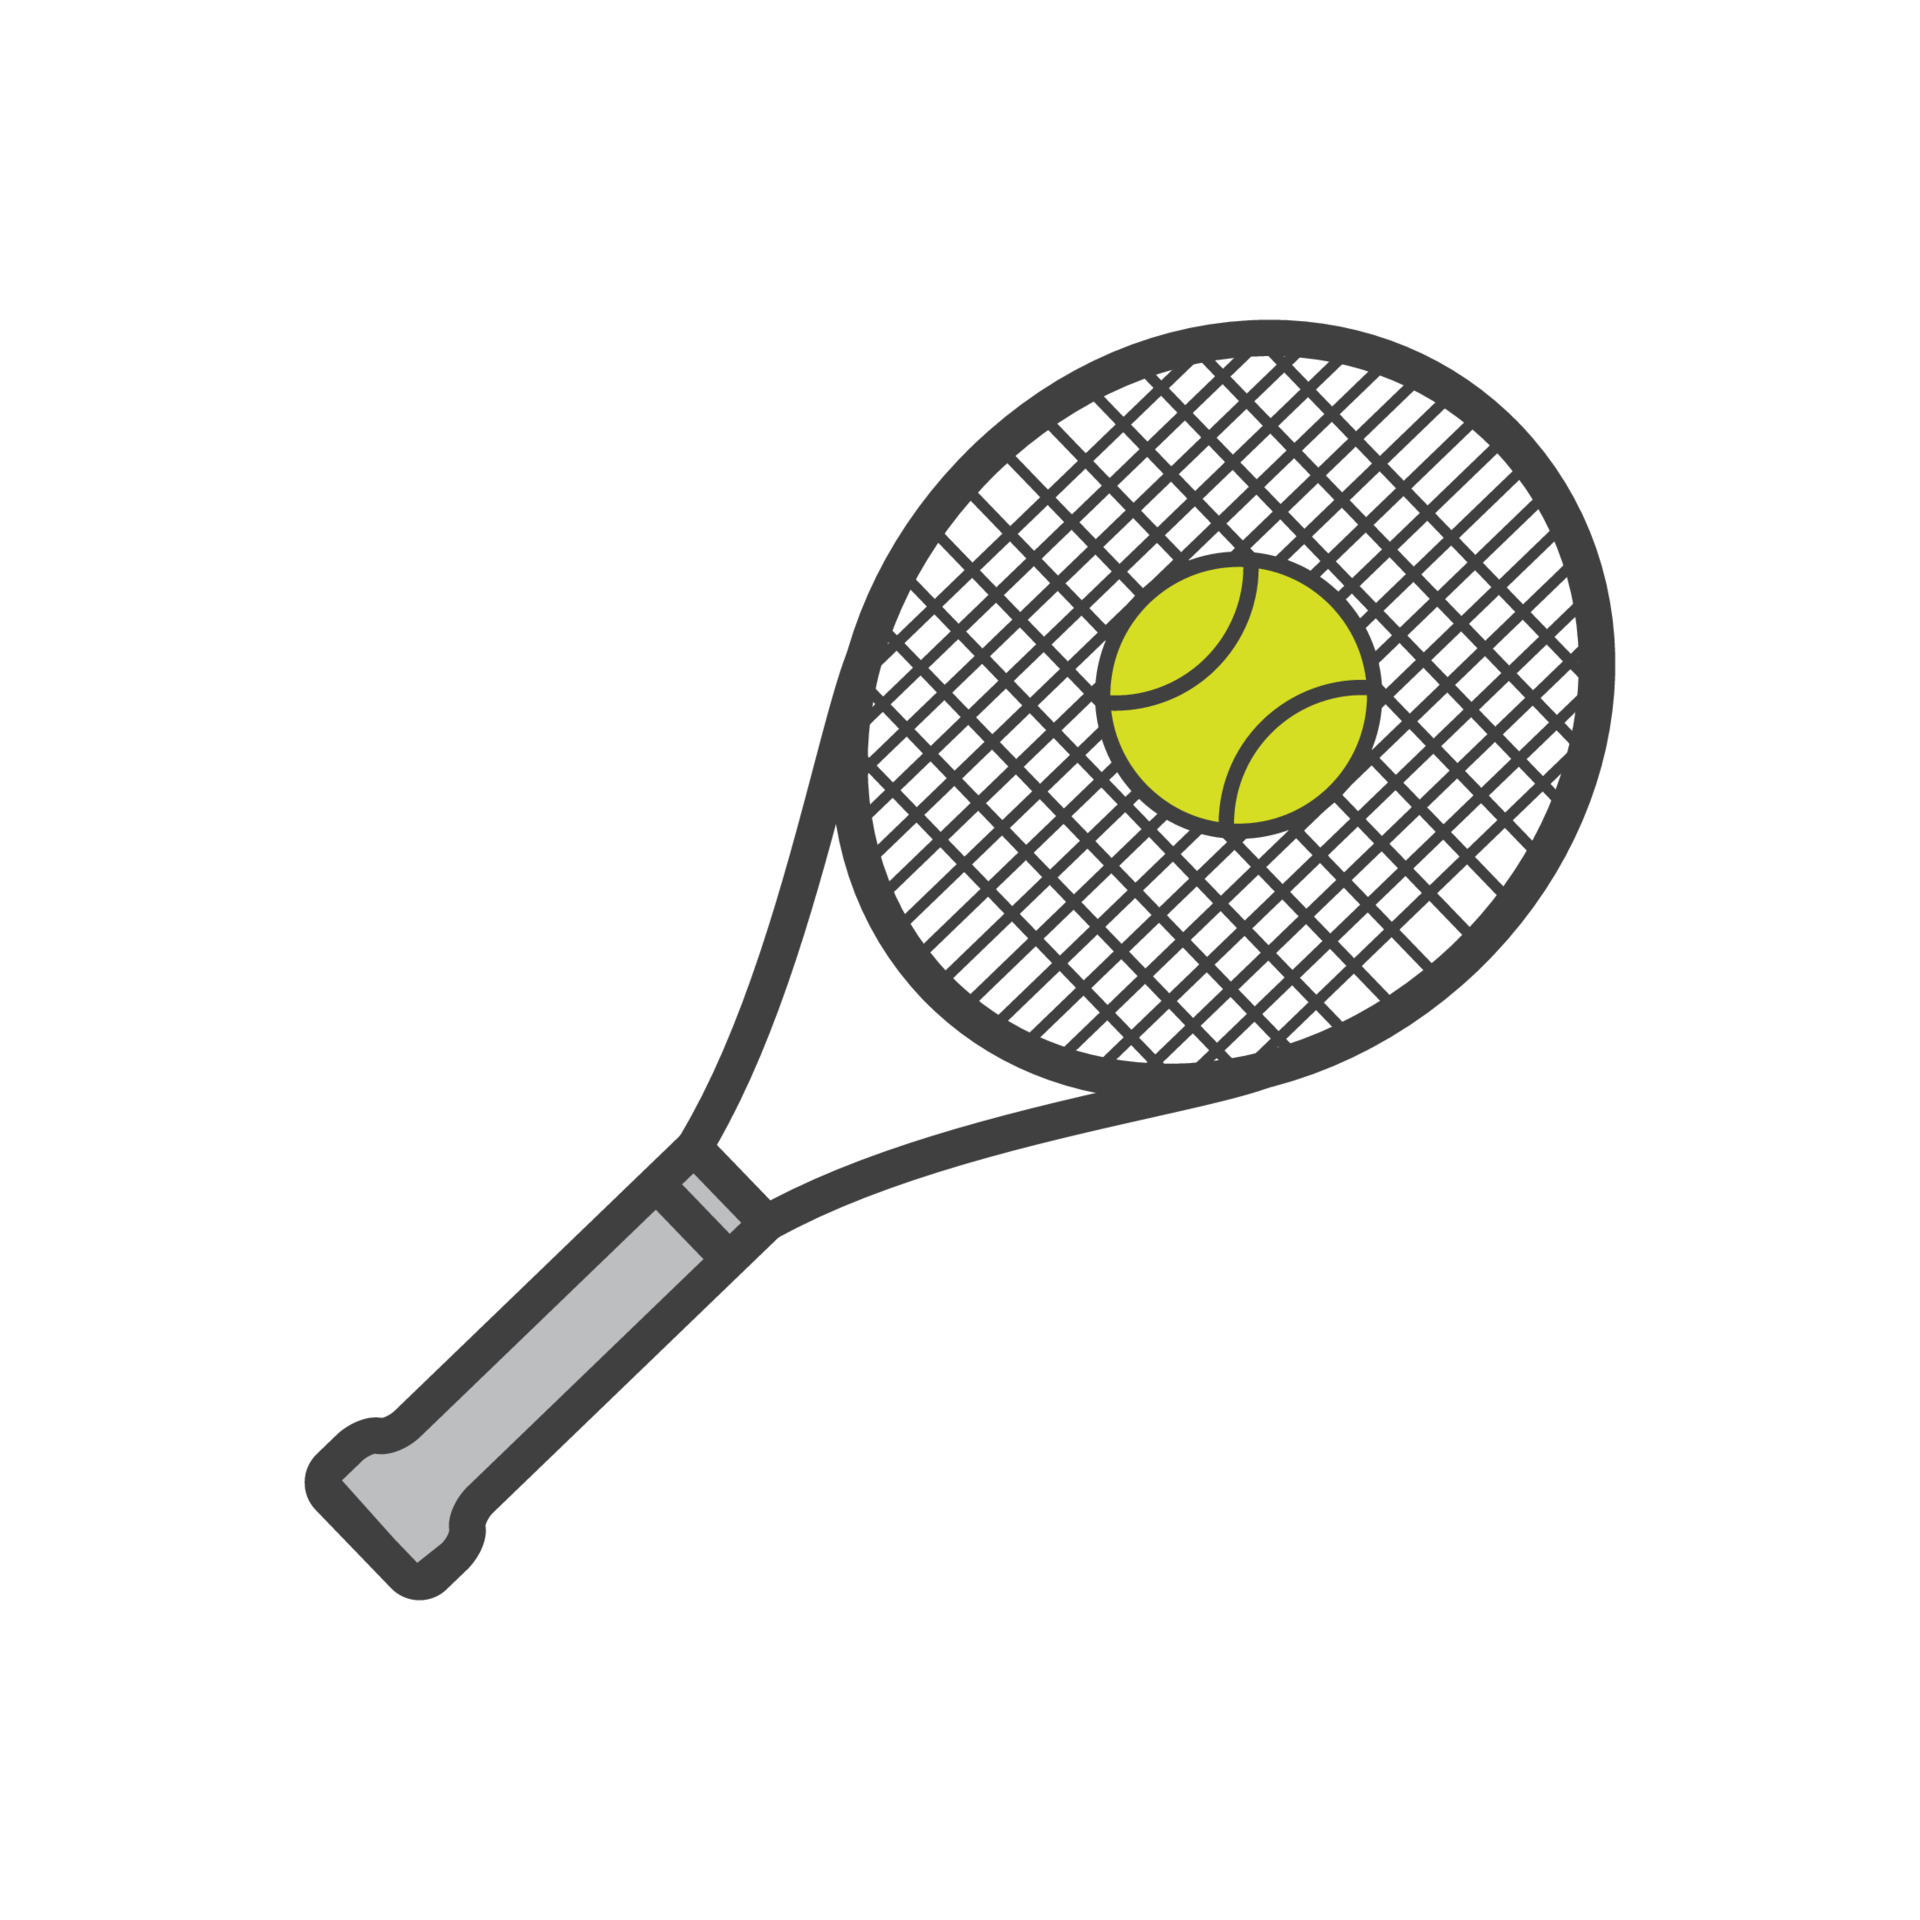 https://static.vecteezy.com/ti/vecteur-libre/p3/5350576-raquette-de-tennis-avec-balle-simple-logo-symbole-icone-vector-graphic-design-illustration-idea-creative-vectoriel.jpg